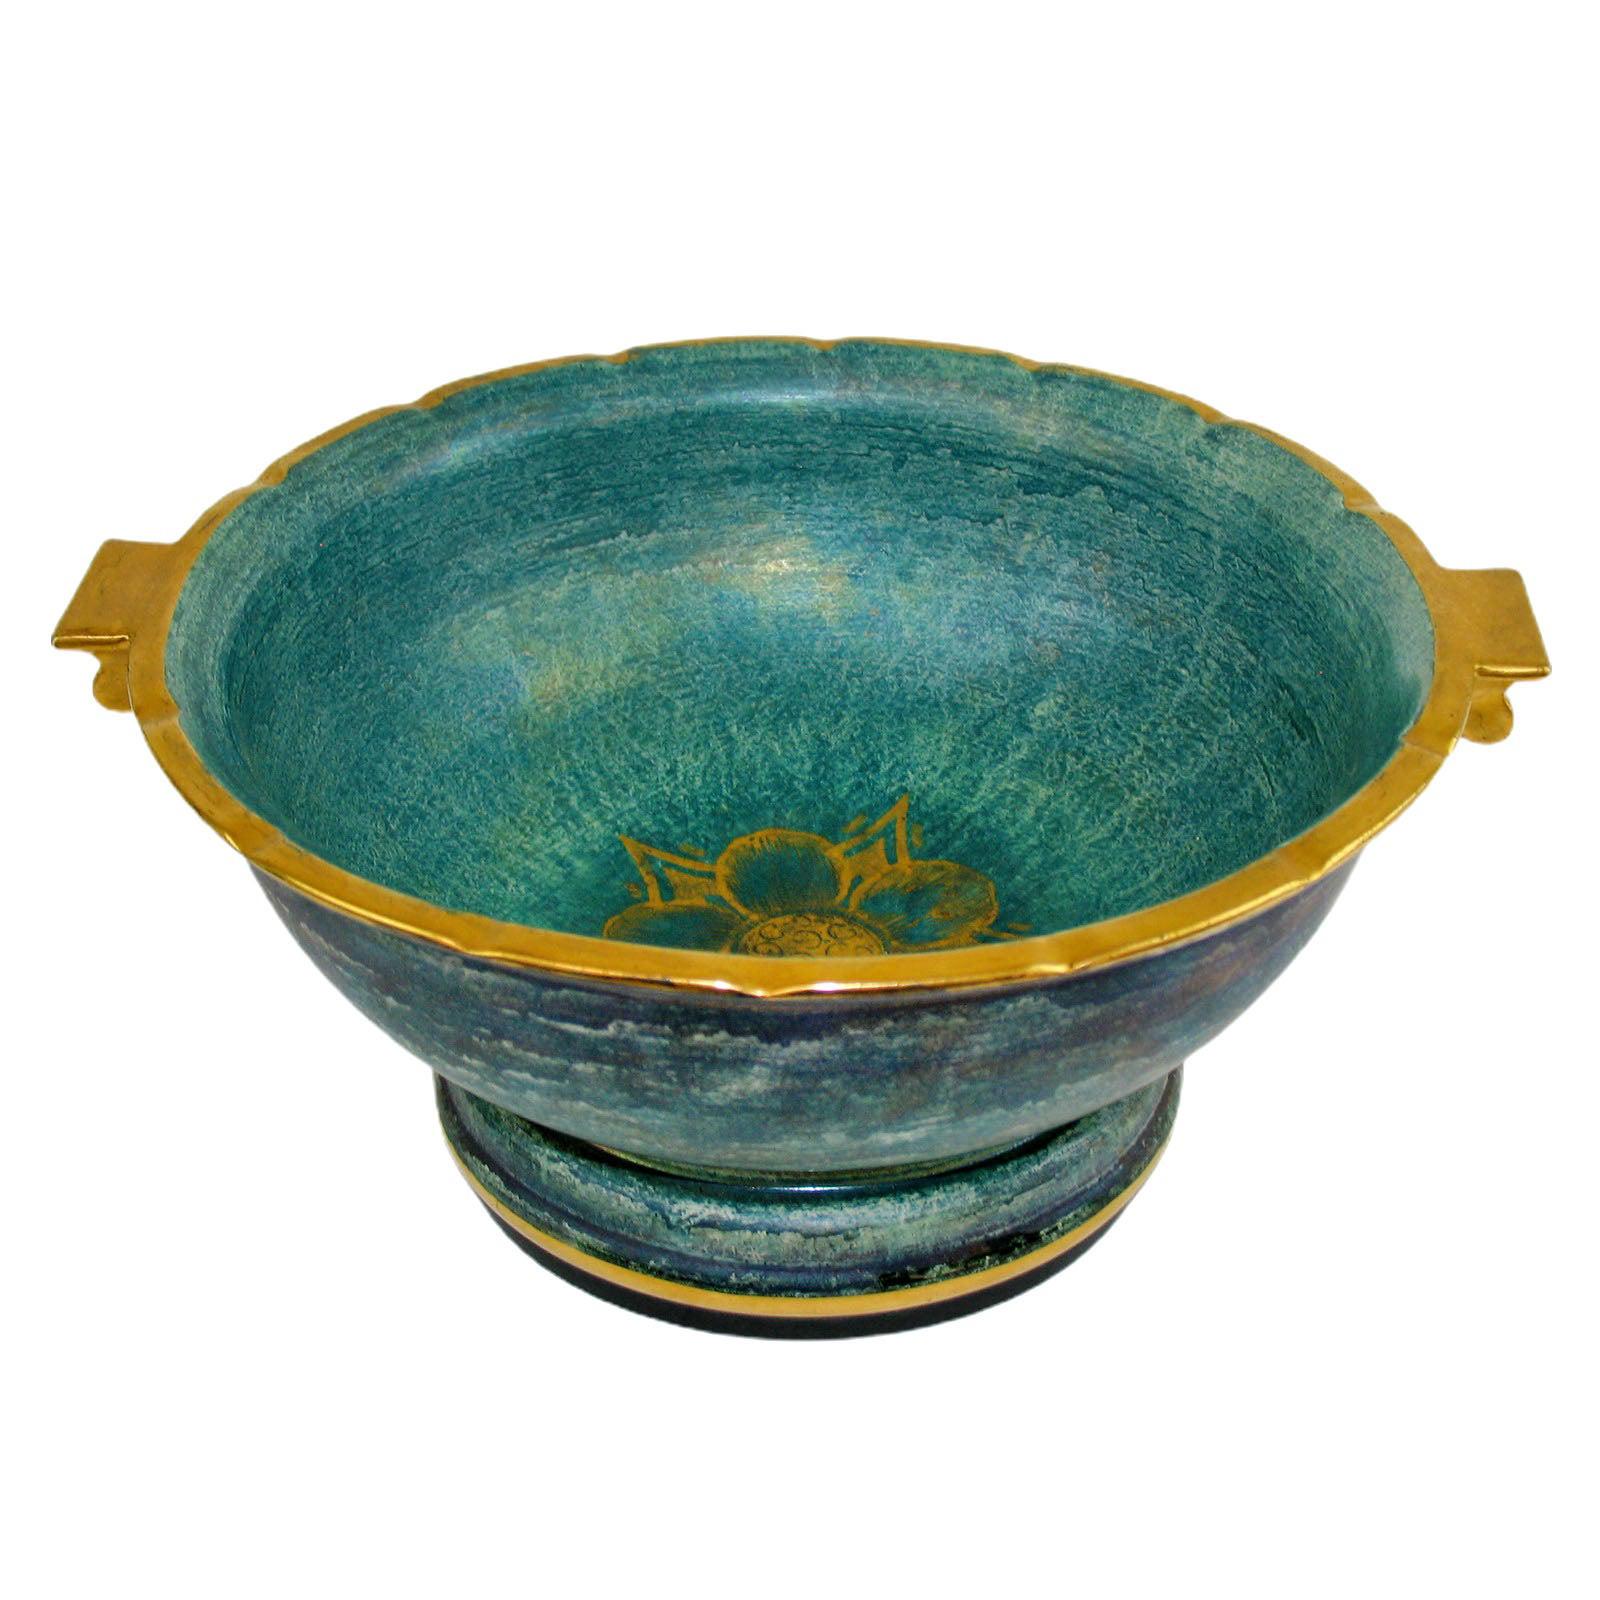 Josef Ekberg Scandinavian Modern Ceramic Footed Bowl, Gustavsberg